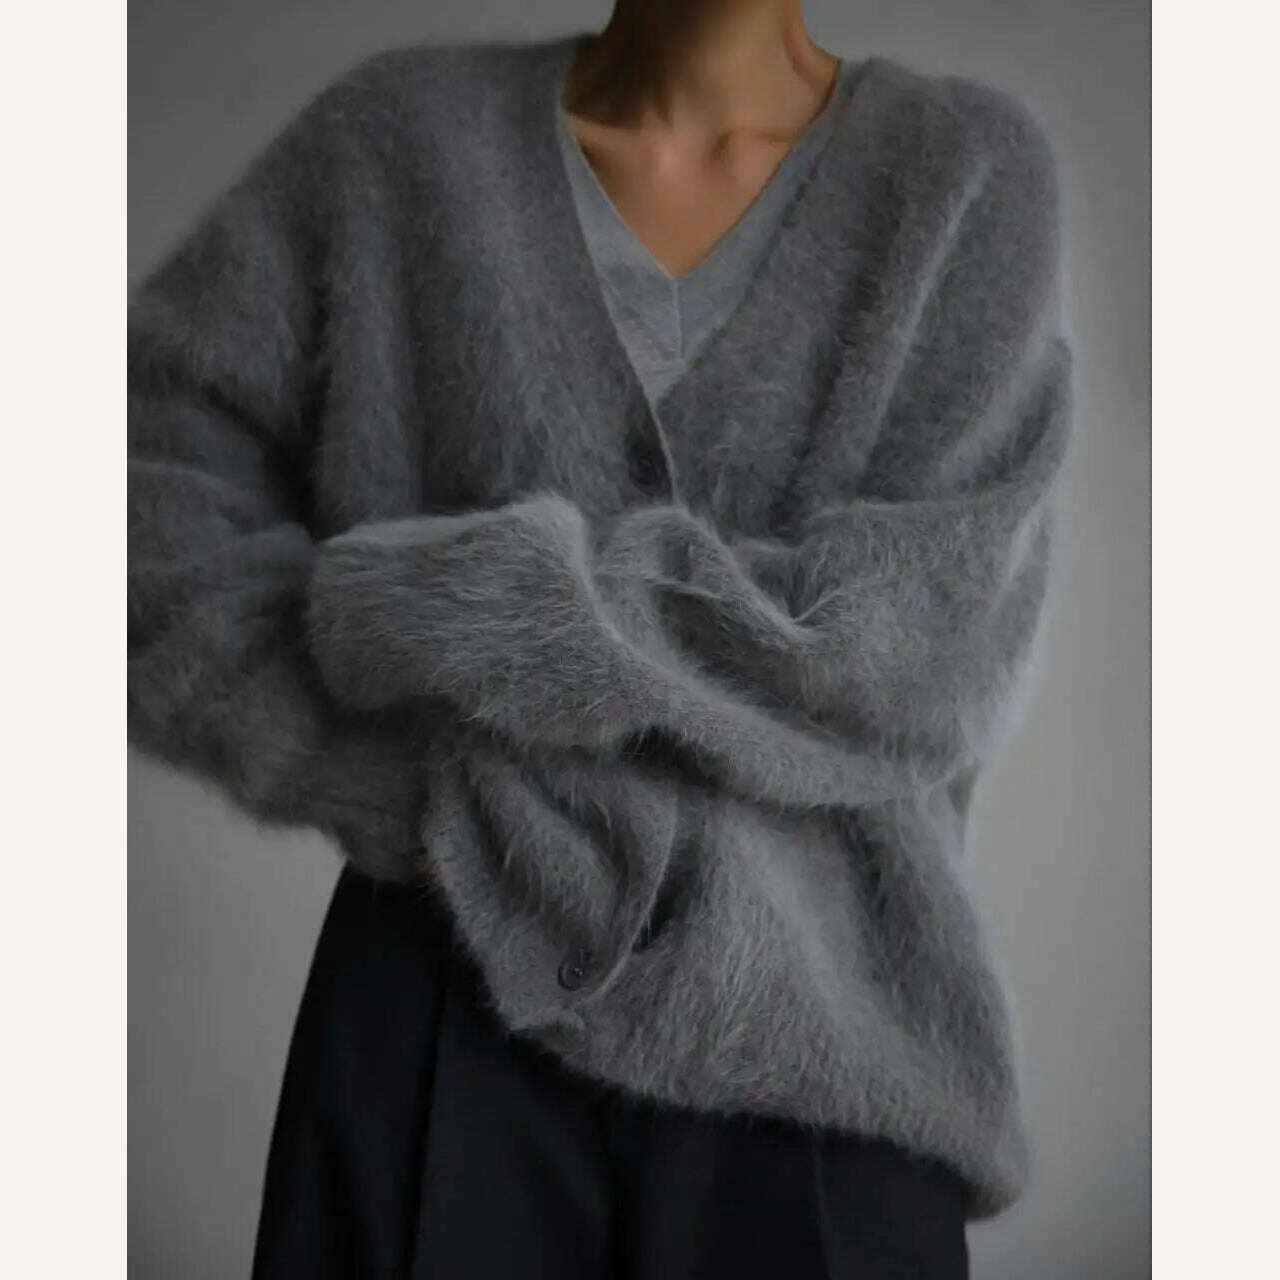 KIMLUD, Hirsionsan Elegant Long Sleeve Sweater Women 2023 New Single-Breasted Female Casual Cardigan Soft Flexible Knitted Outwear, Dark Grey / M, KIMLUD Womens Clothes